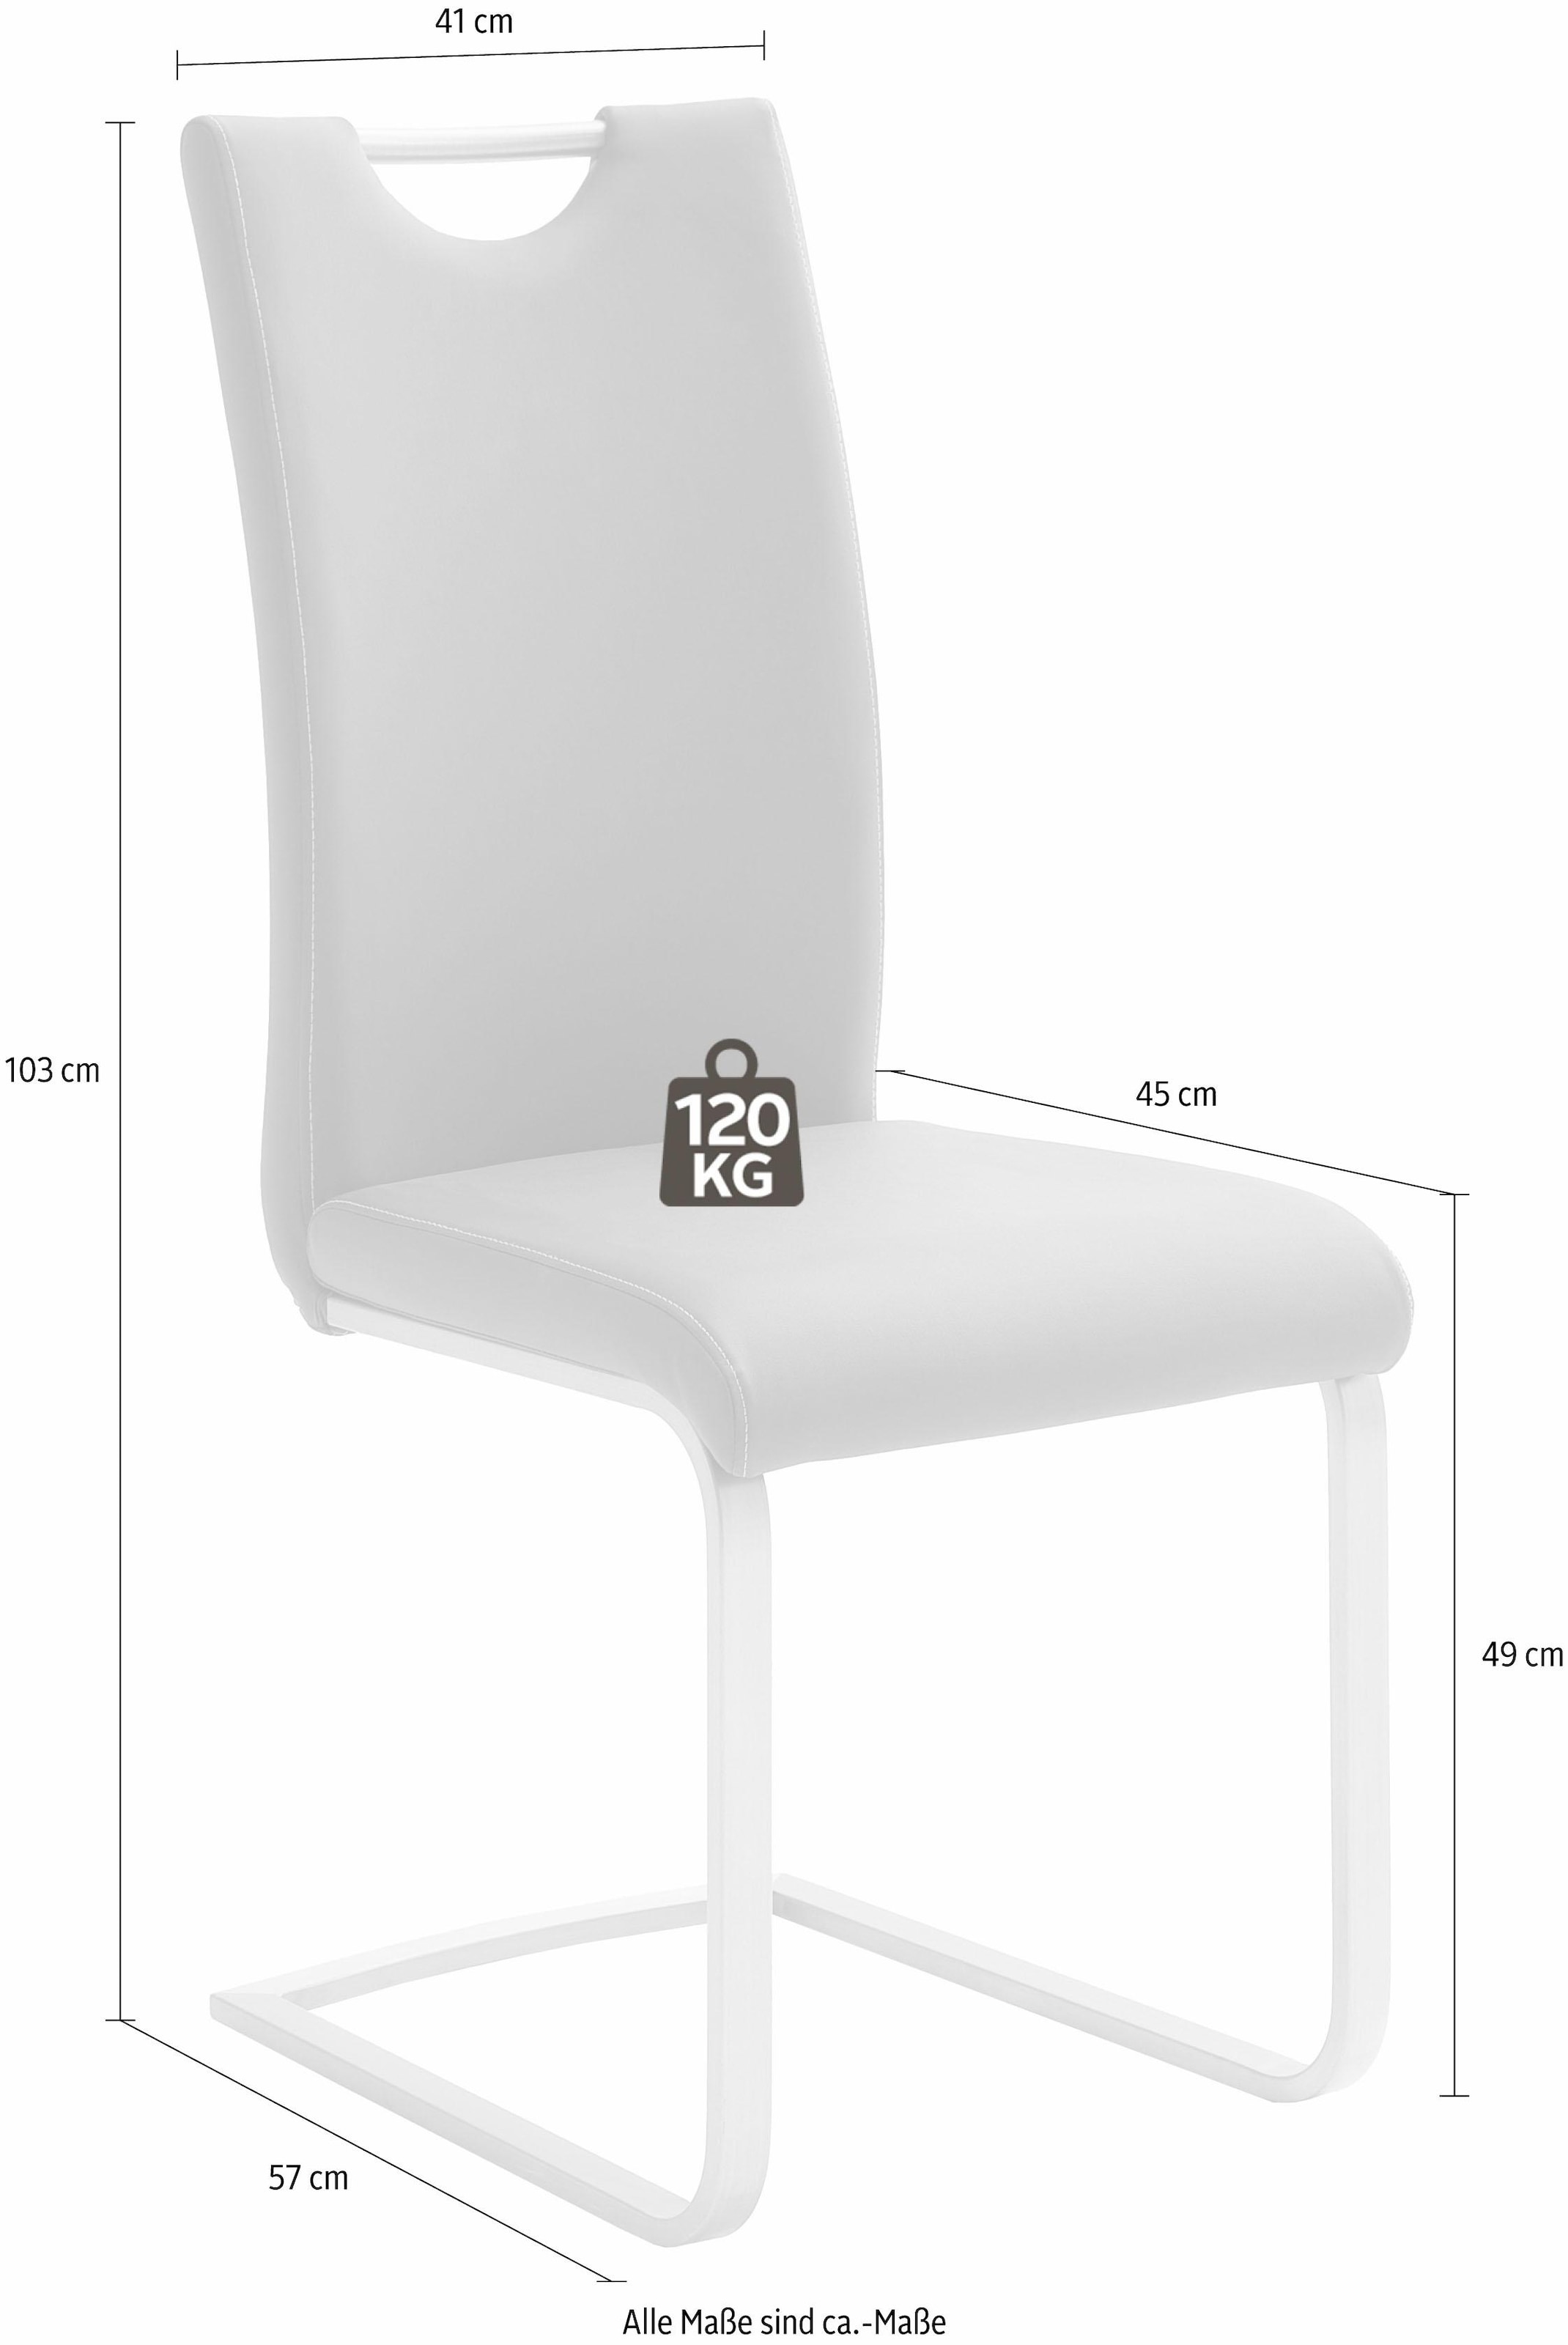 MCA furniture Freischwinger »Paulo«, (Set), 4 St., Kunstleder, Stuhl  belastbar bis 120 kg bequem kaufen